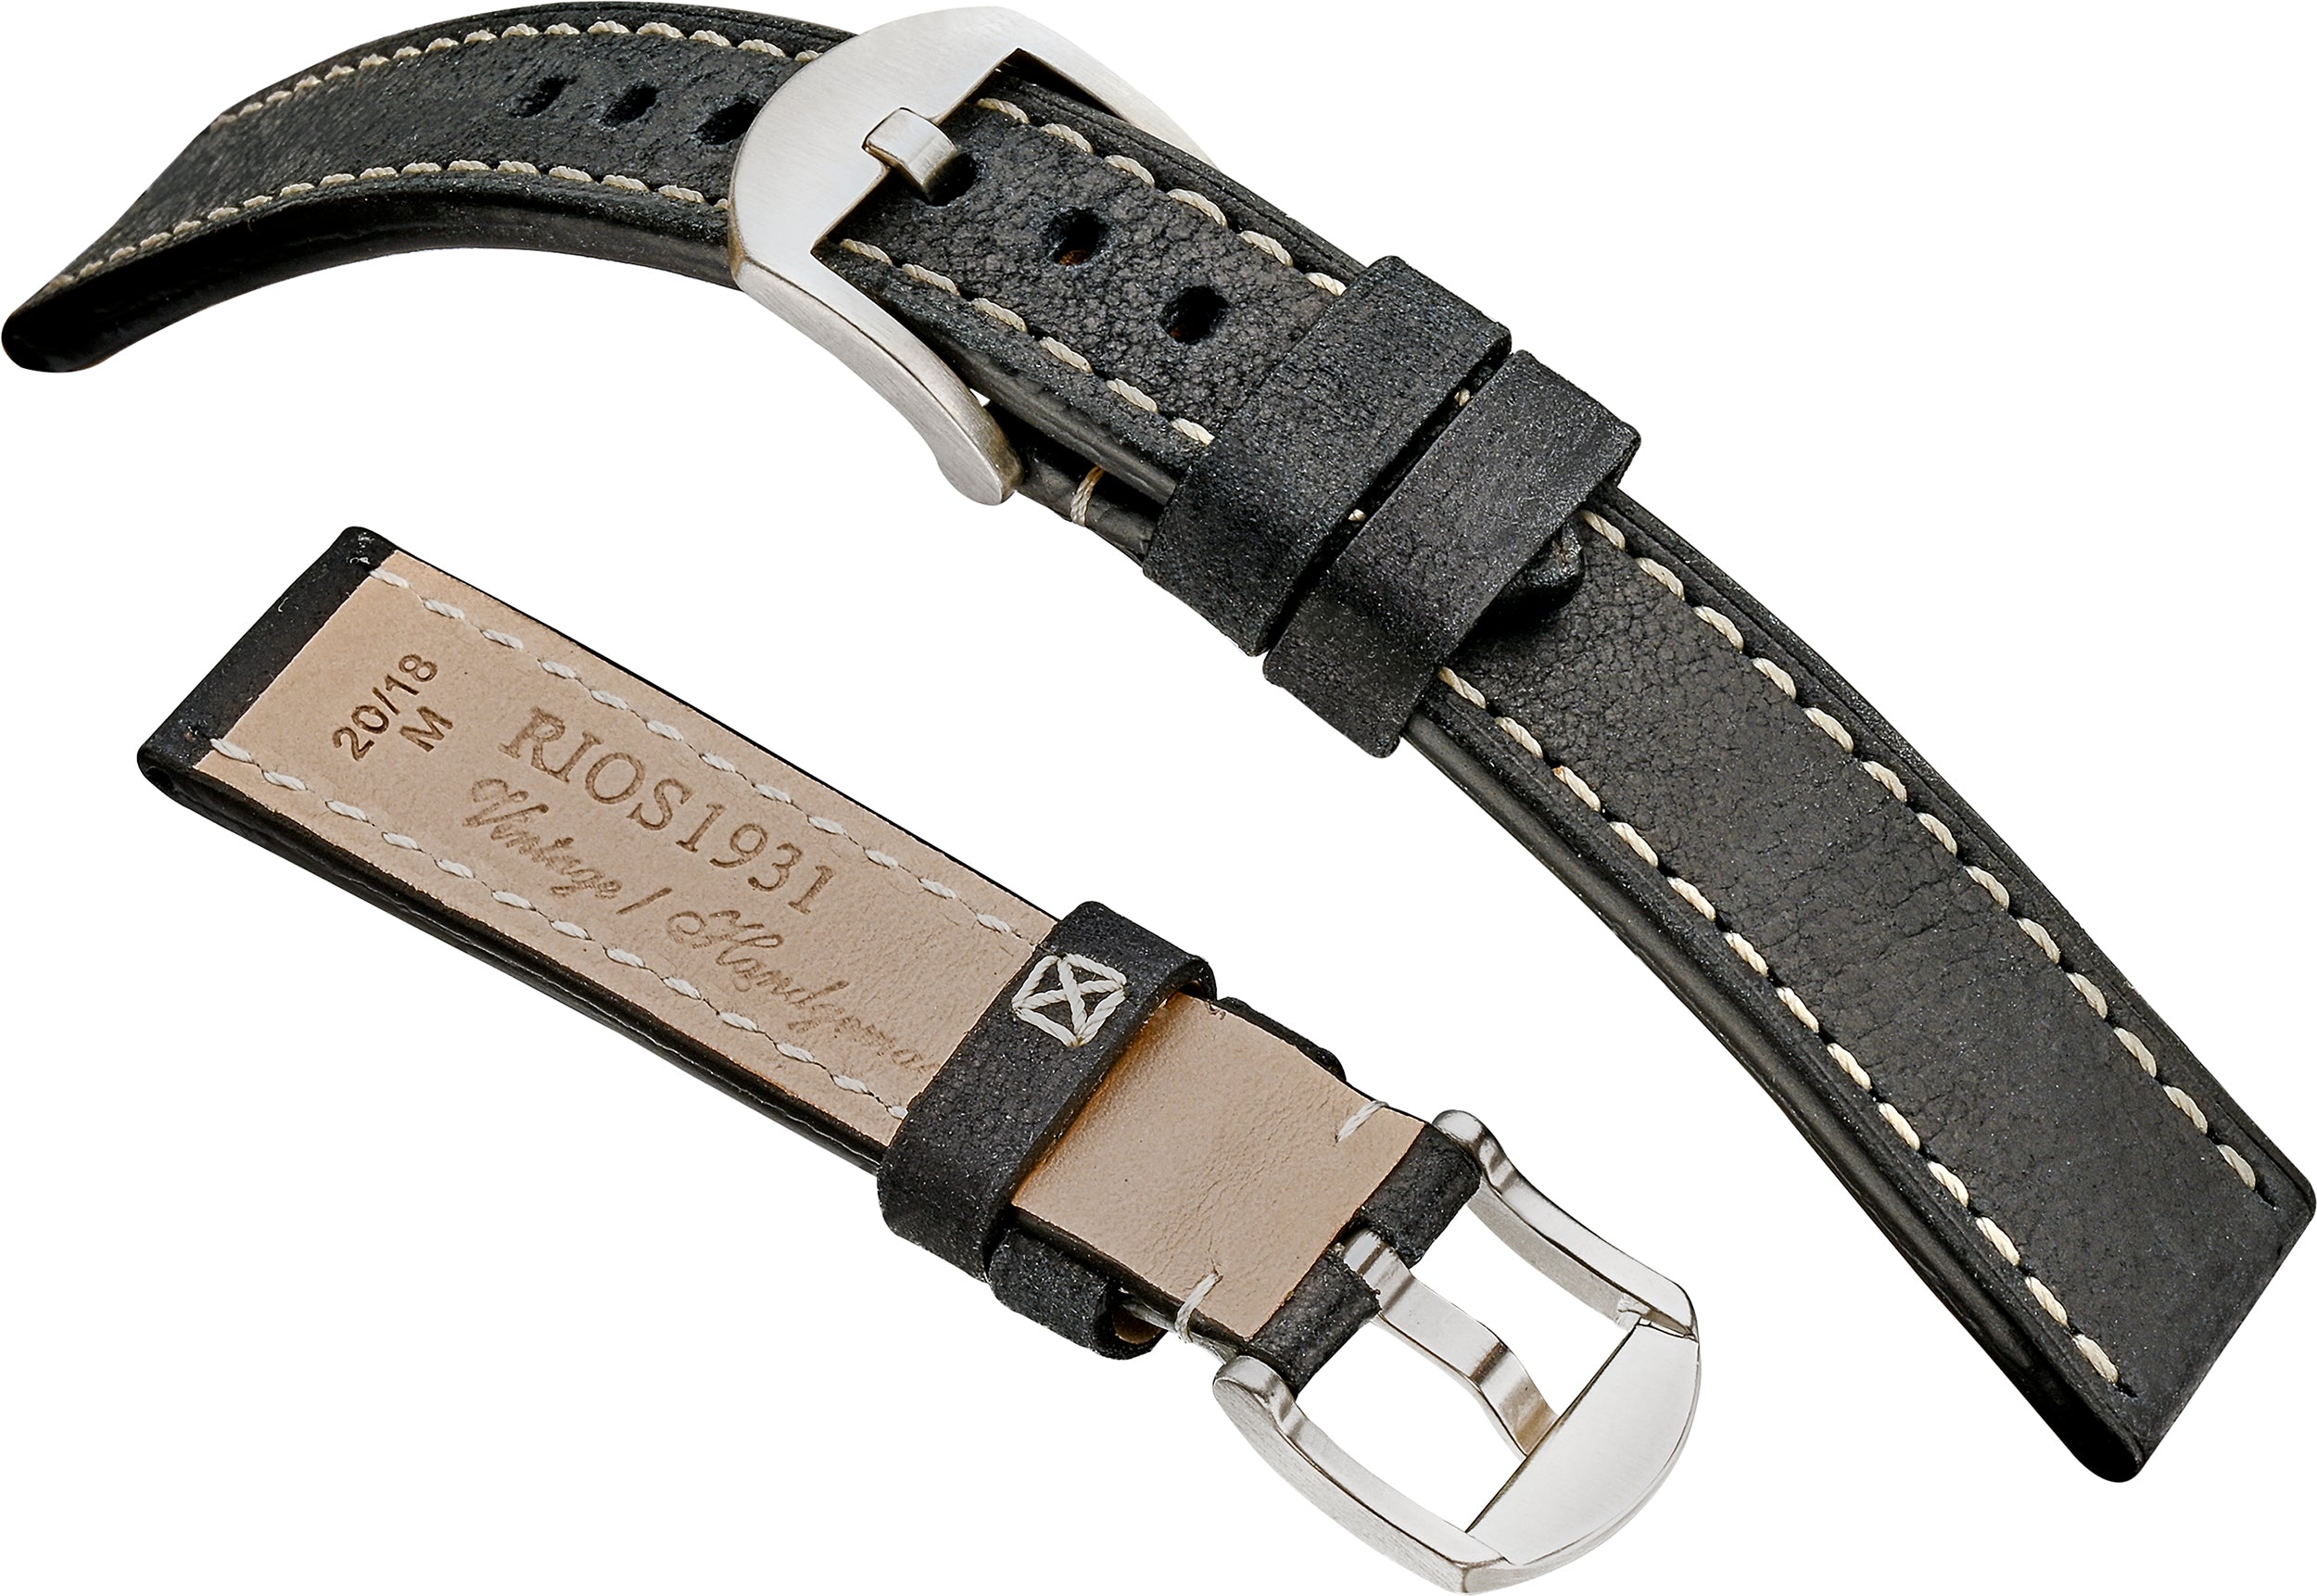 R190 OXFORD watch strap